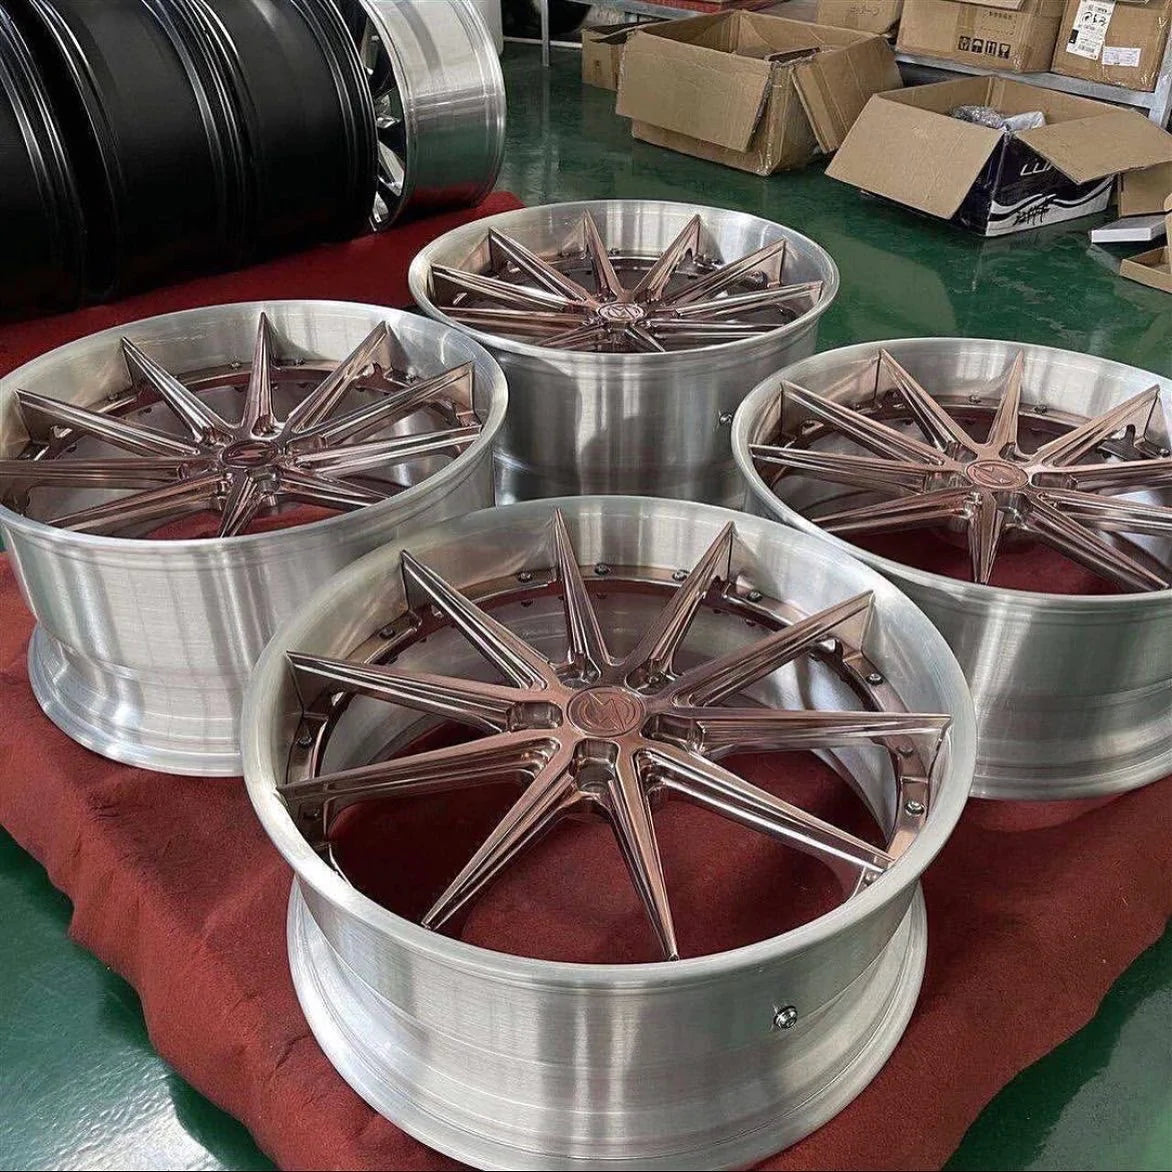 Custom 2-Piece Forged Wheel Set Rose Gold and Brushed Aluminum for Tesla Model S